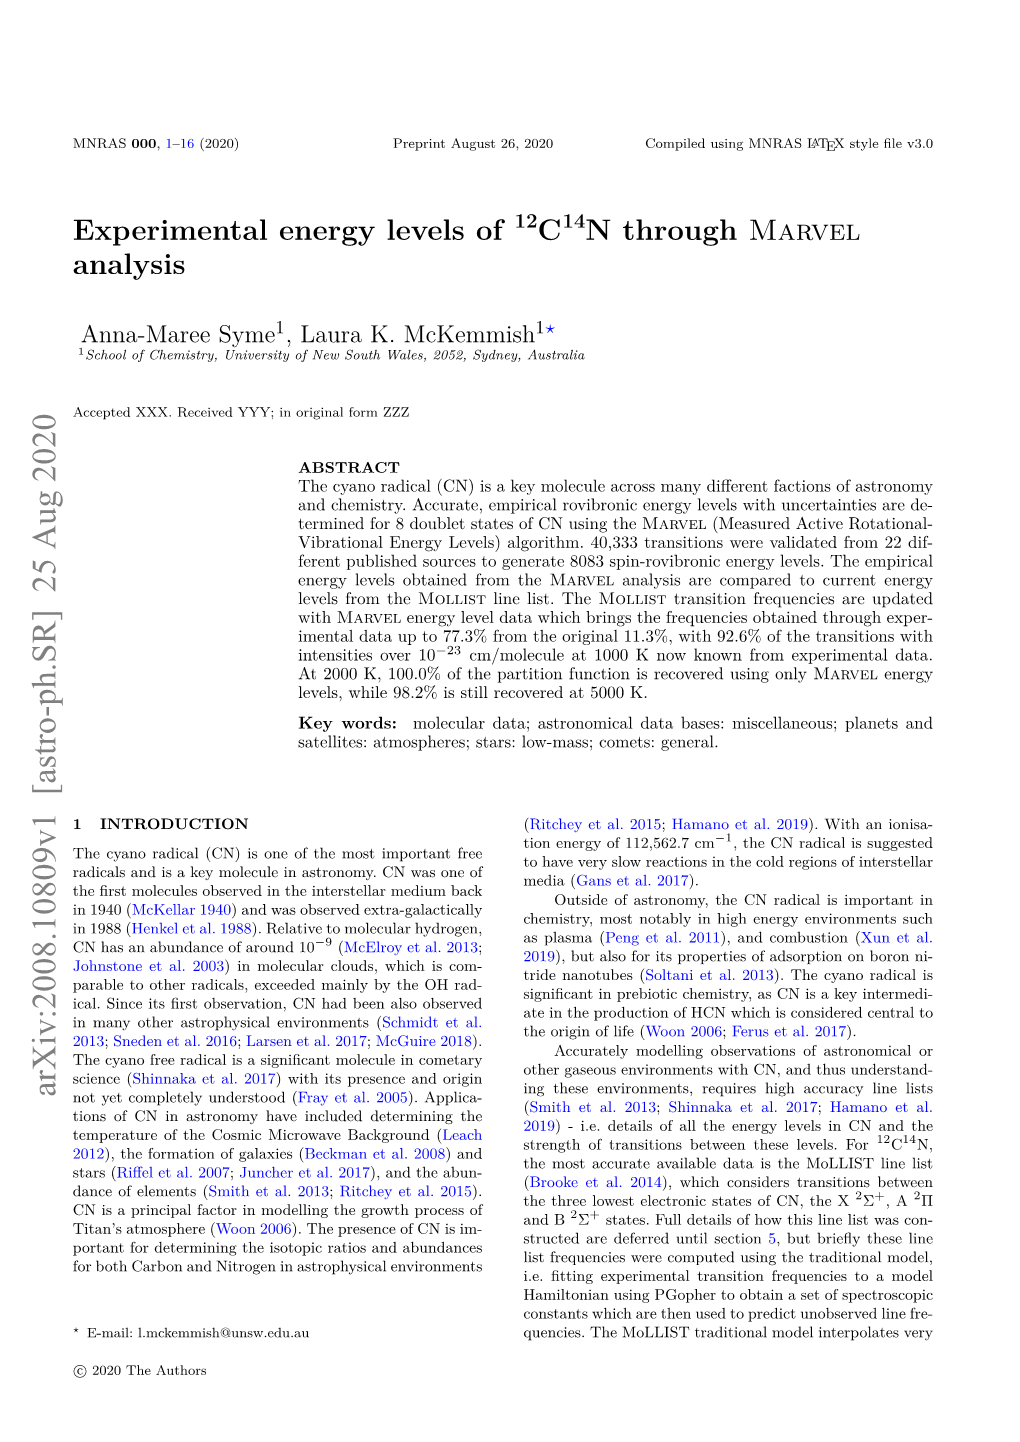 Experimental Energy Levels of 12C14N Through Marvel Analysis